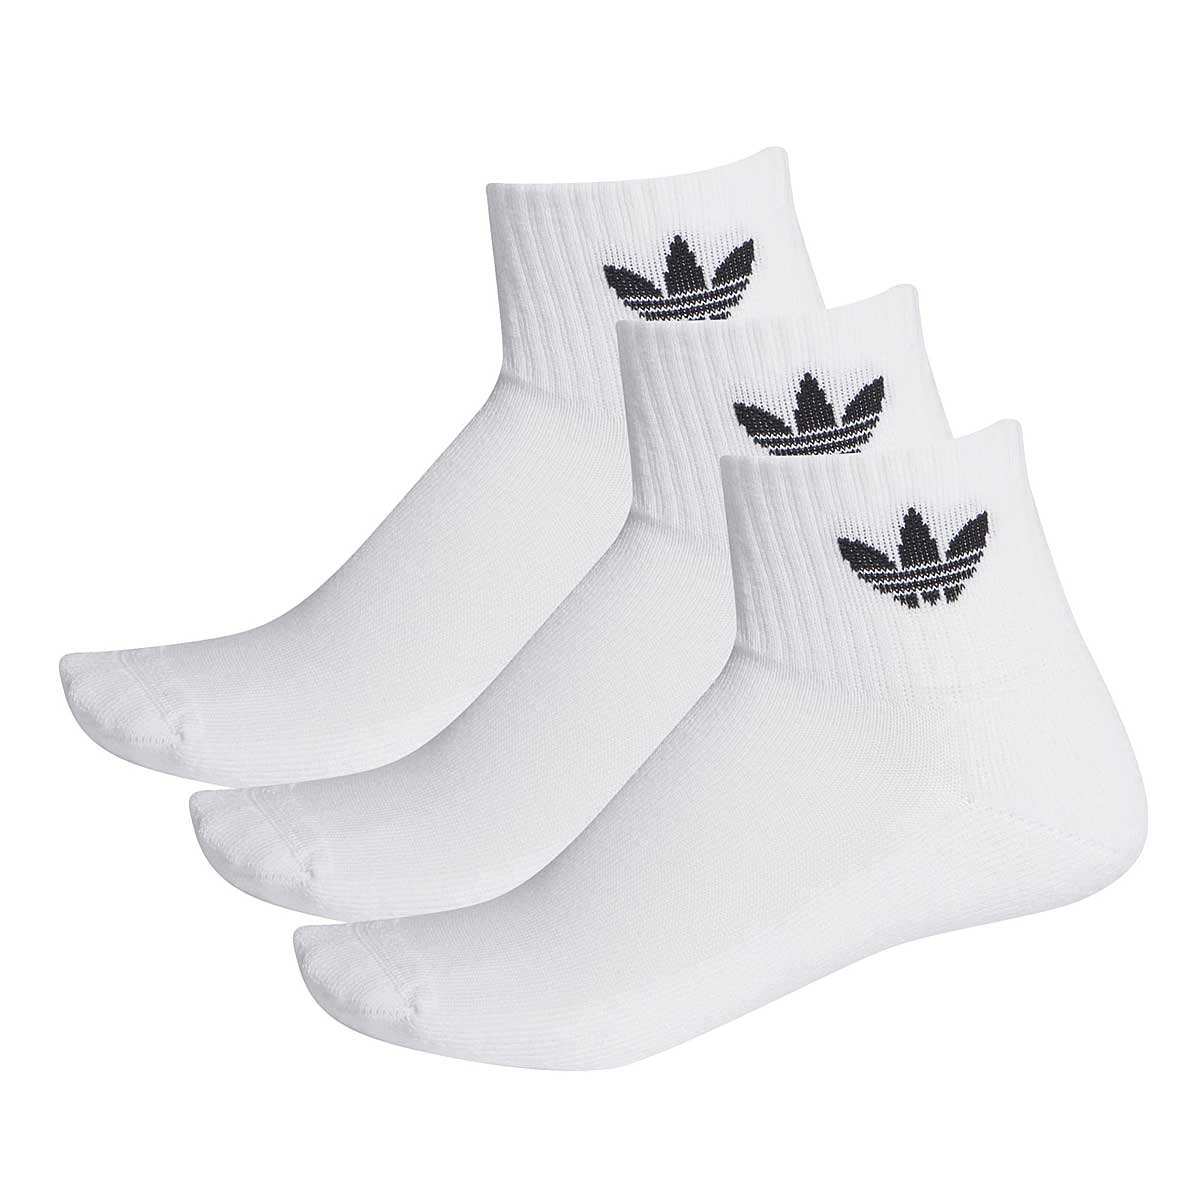 Image of Adidas Originals Mid Ankle Socks, White/white/black